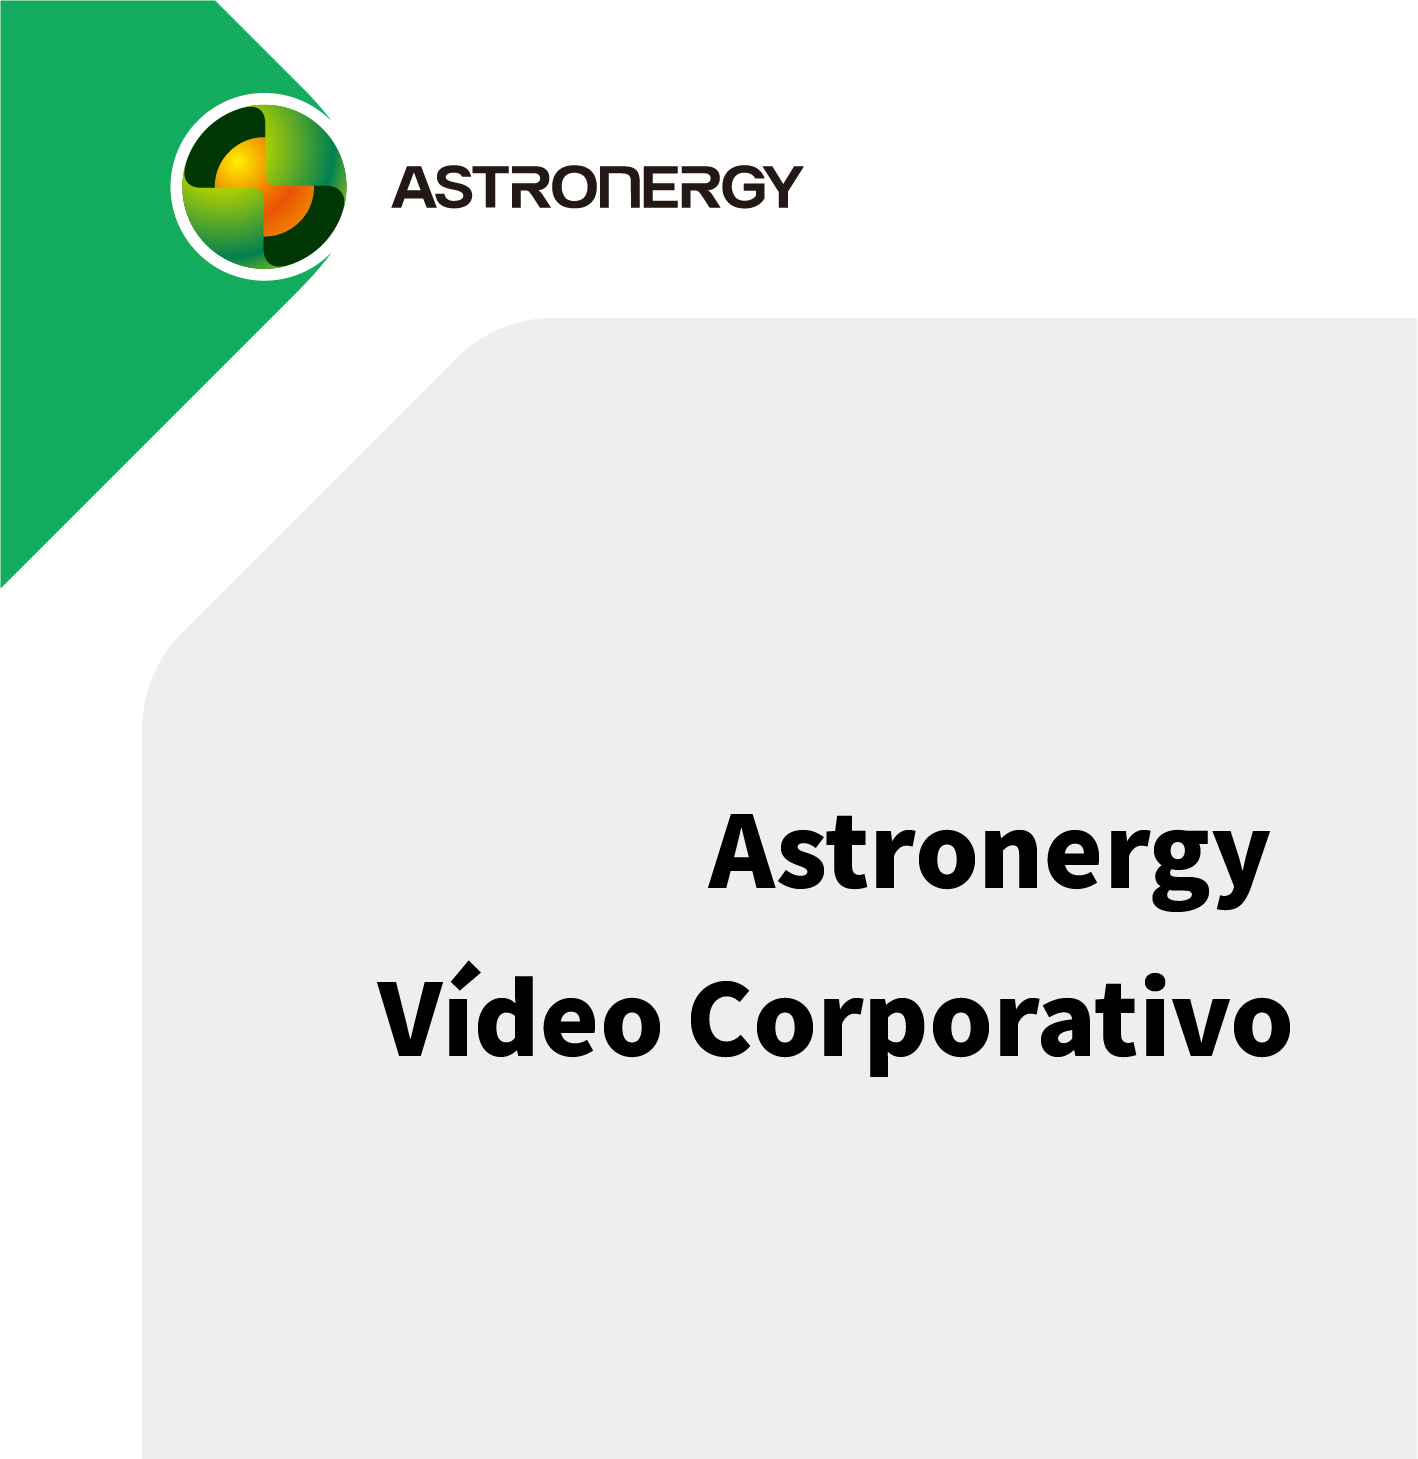 Astronergy Vídeo Corporativo